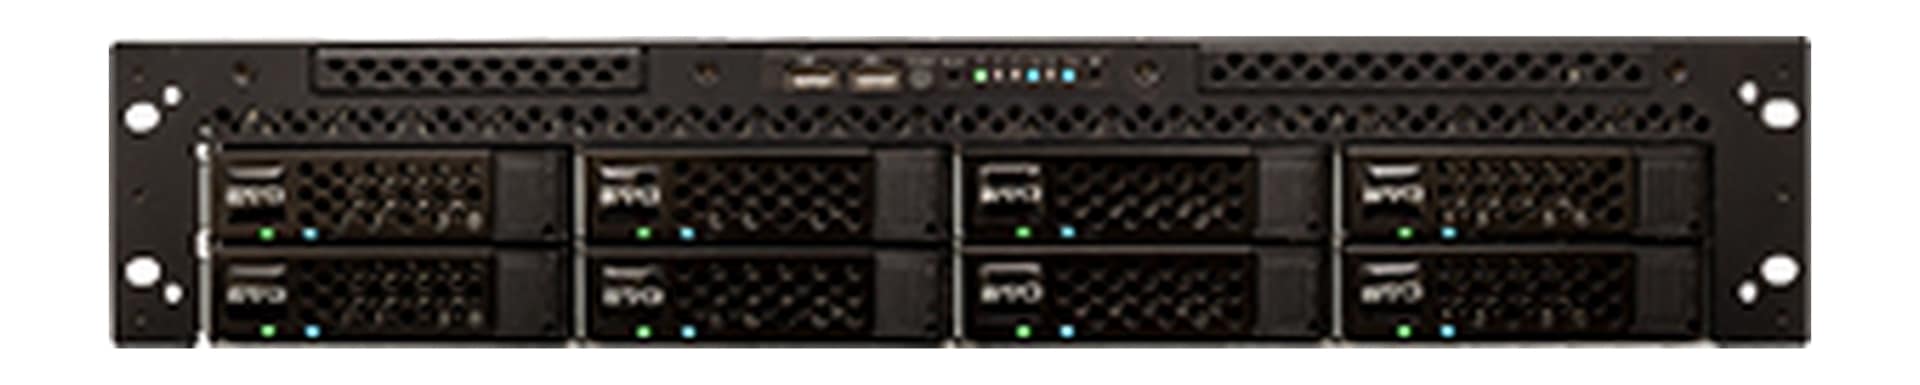 SNS EVO 2U 8 Bay Shared Storage Server with 7.6TB Raw Capacity Solid State Drive